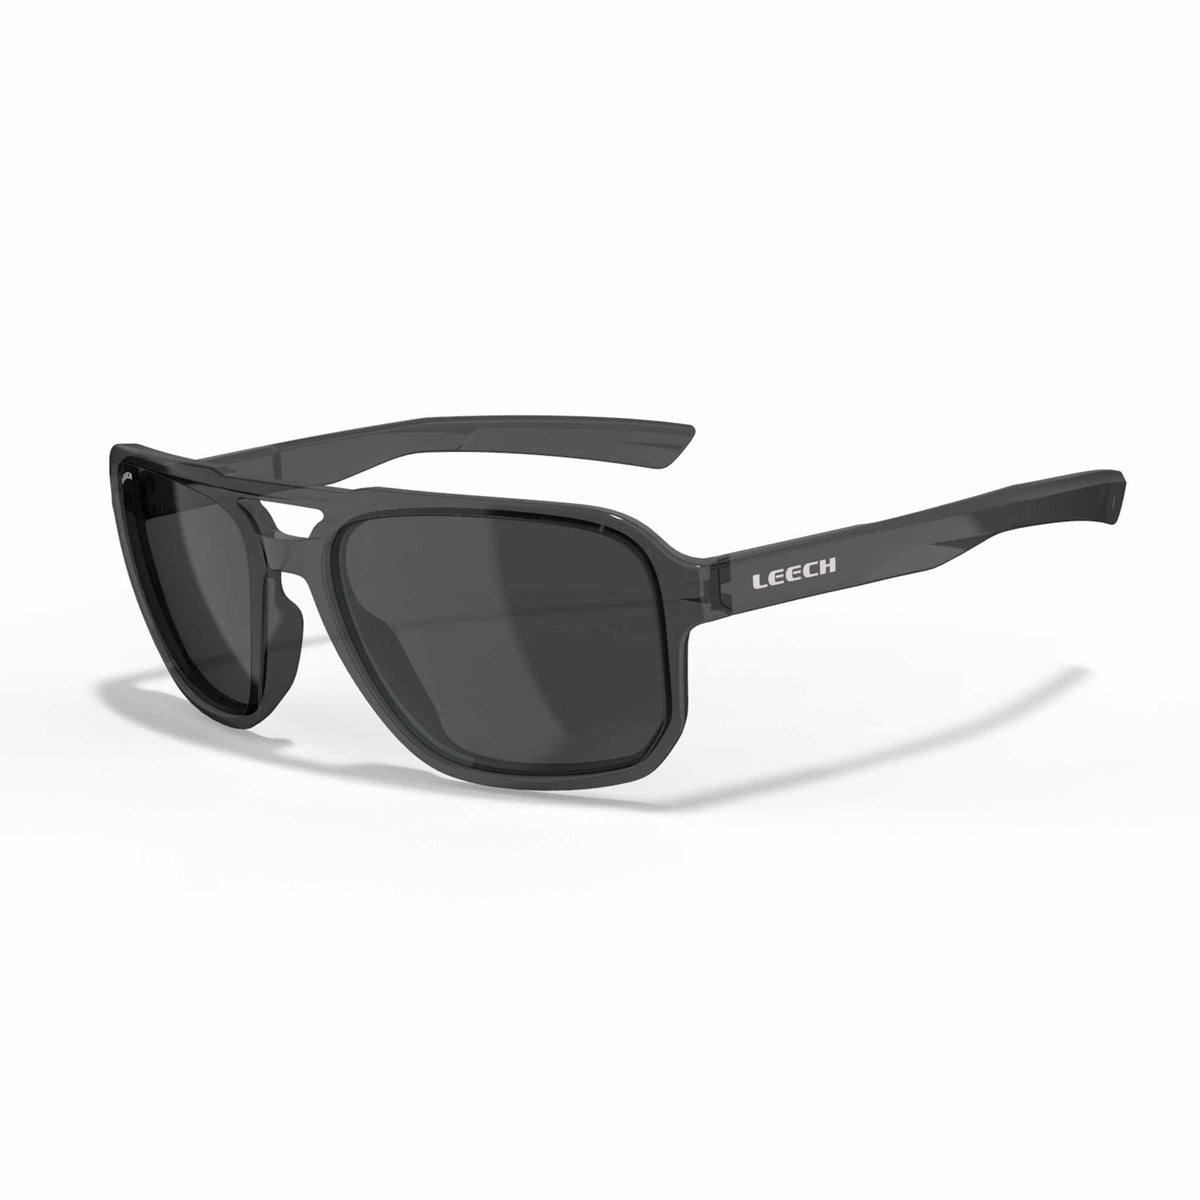 Leech Eyewear ATW9 ATW9 BLACK Sunglasses